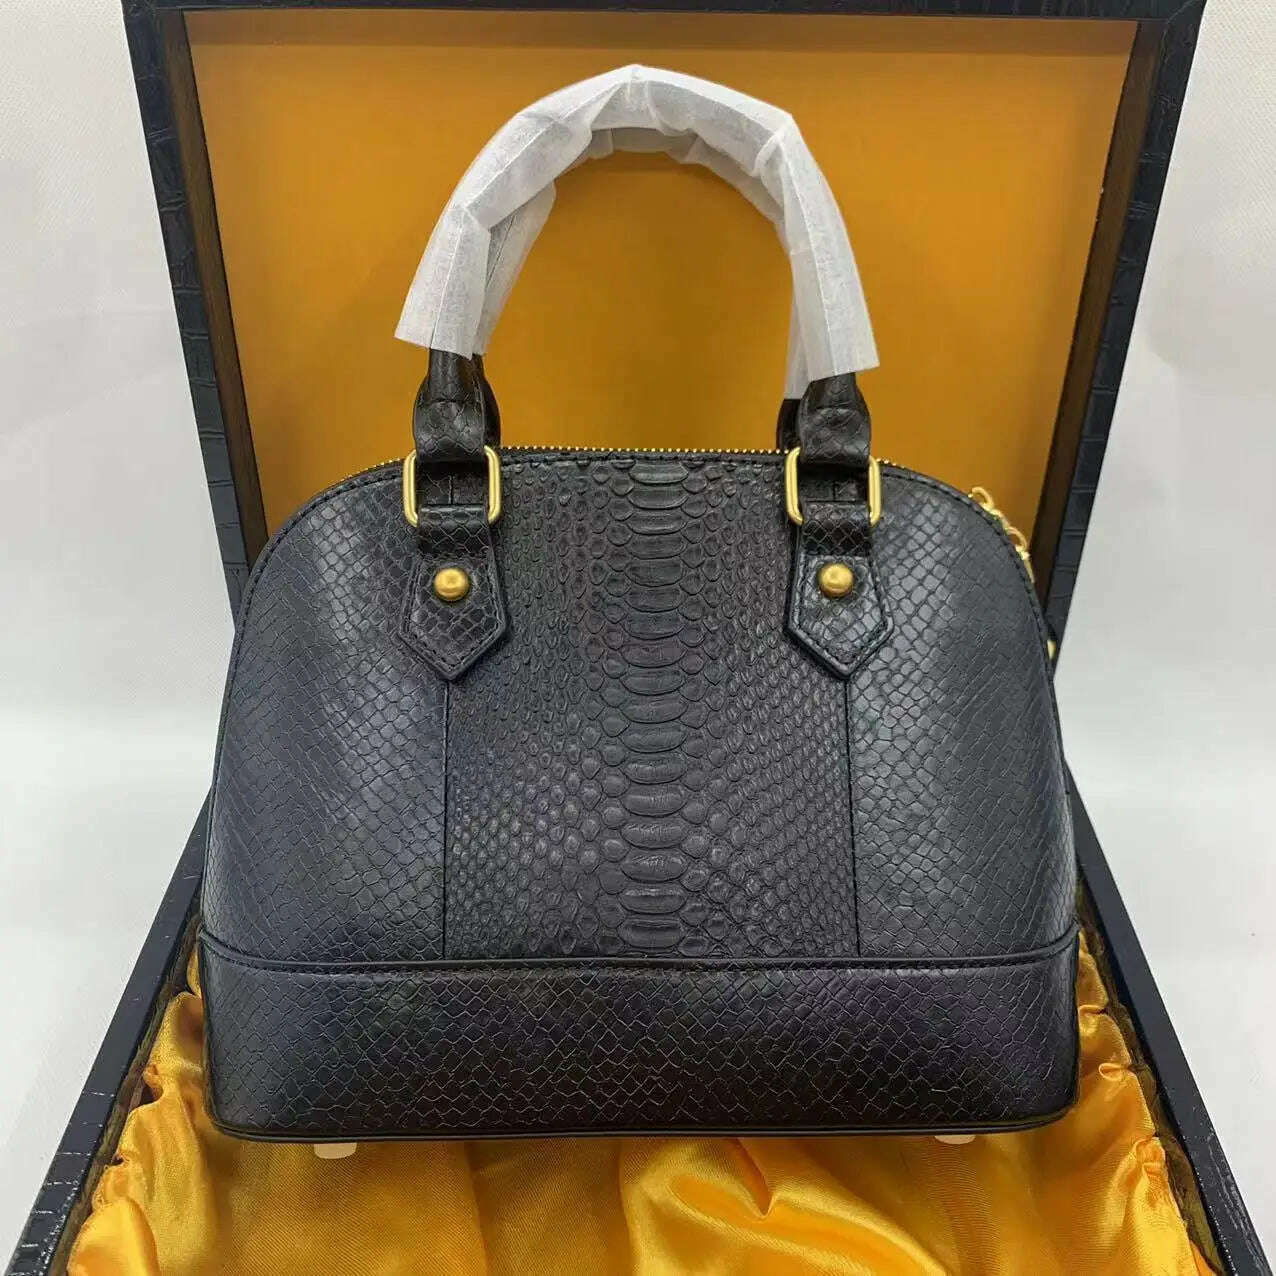 KIMLUD, Luxury Brand Women's Bag Noble Snake Shell Bag European And American Fashion Personalized Bag Famous Designer Handbag For Women, black, KIMLUD Women's Clothes